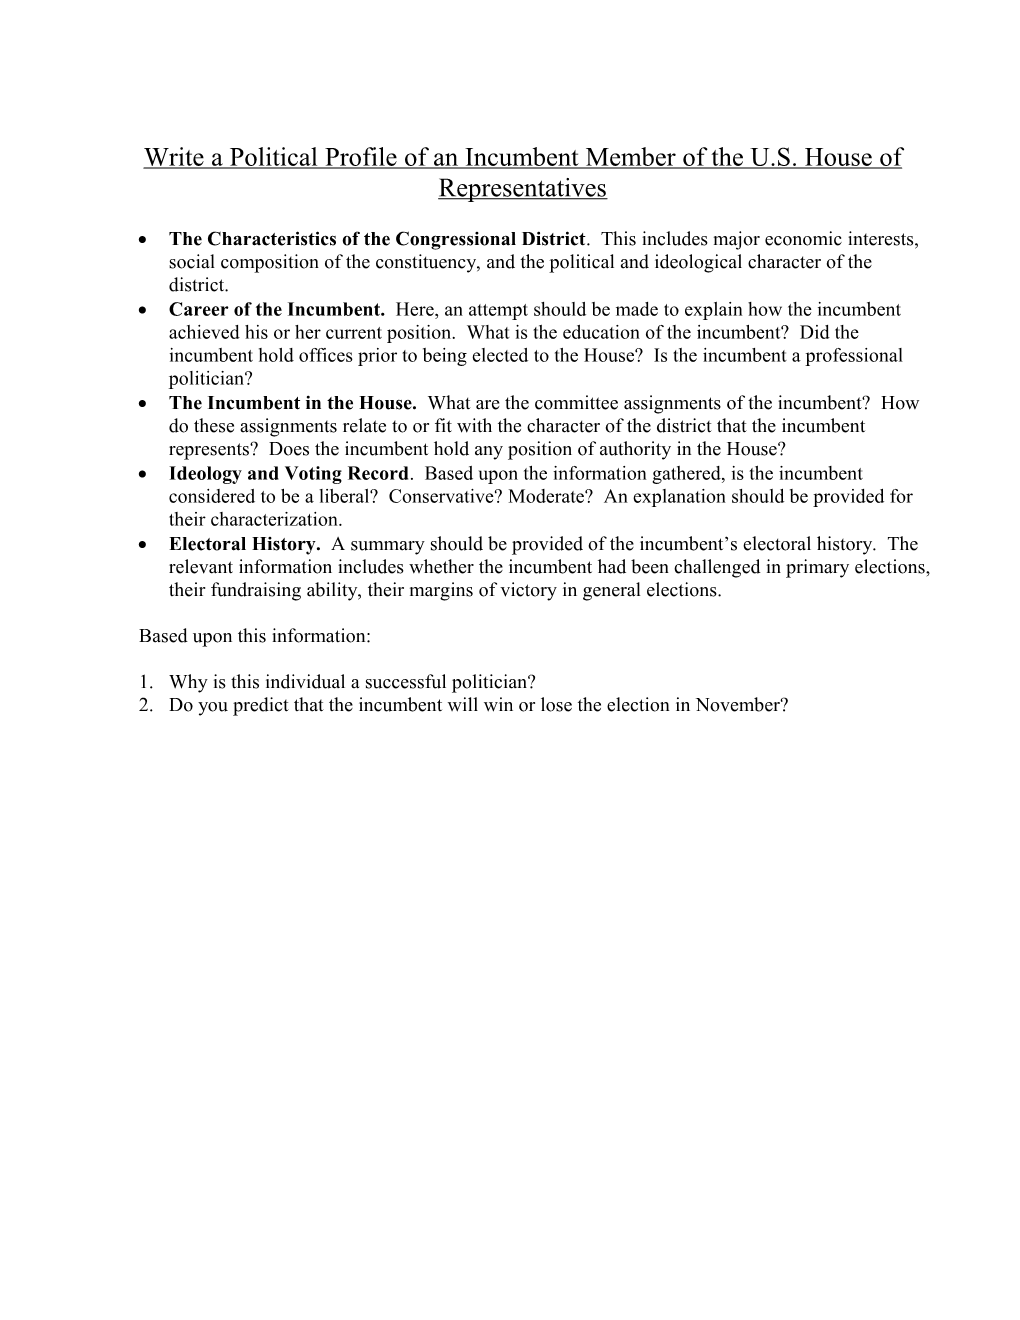 Write a Political Profile of an Incumbent Member of the U.S. House of Representatives